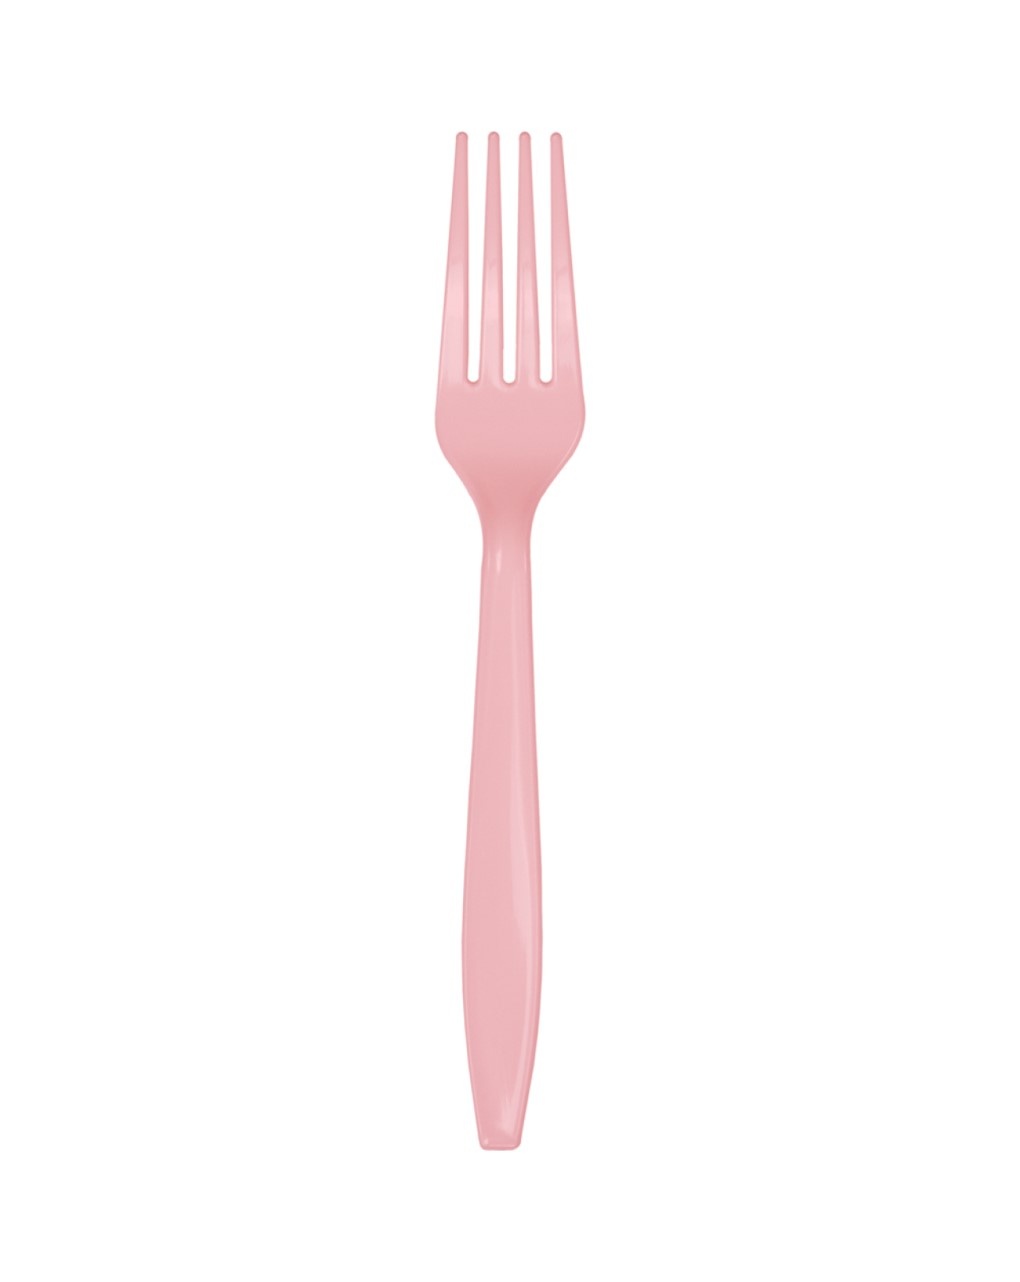 Forchetta plastica h. 18 cm - 24 pezzi  - rosa pastello